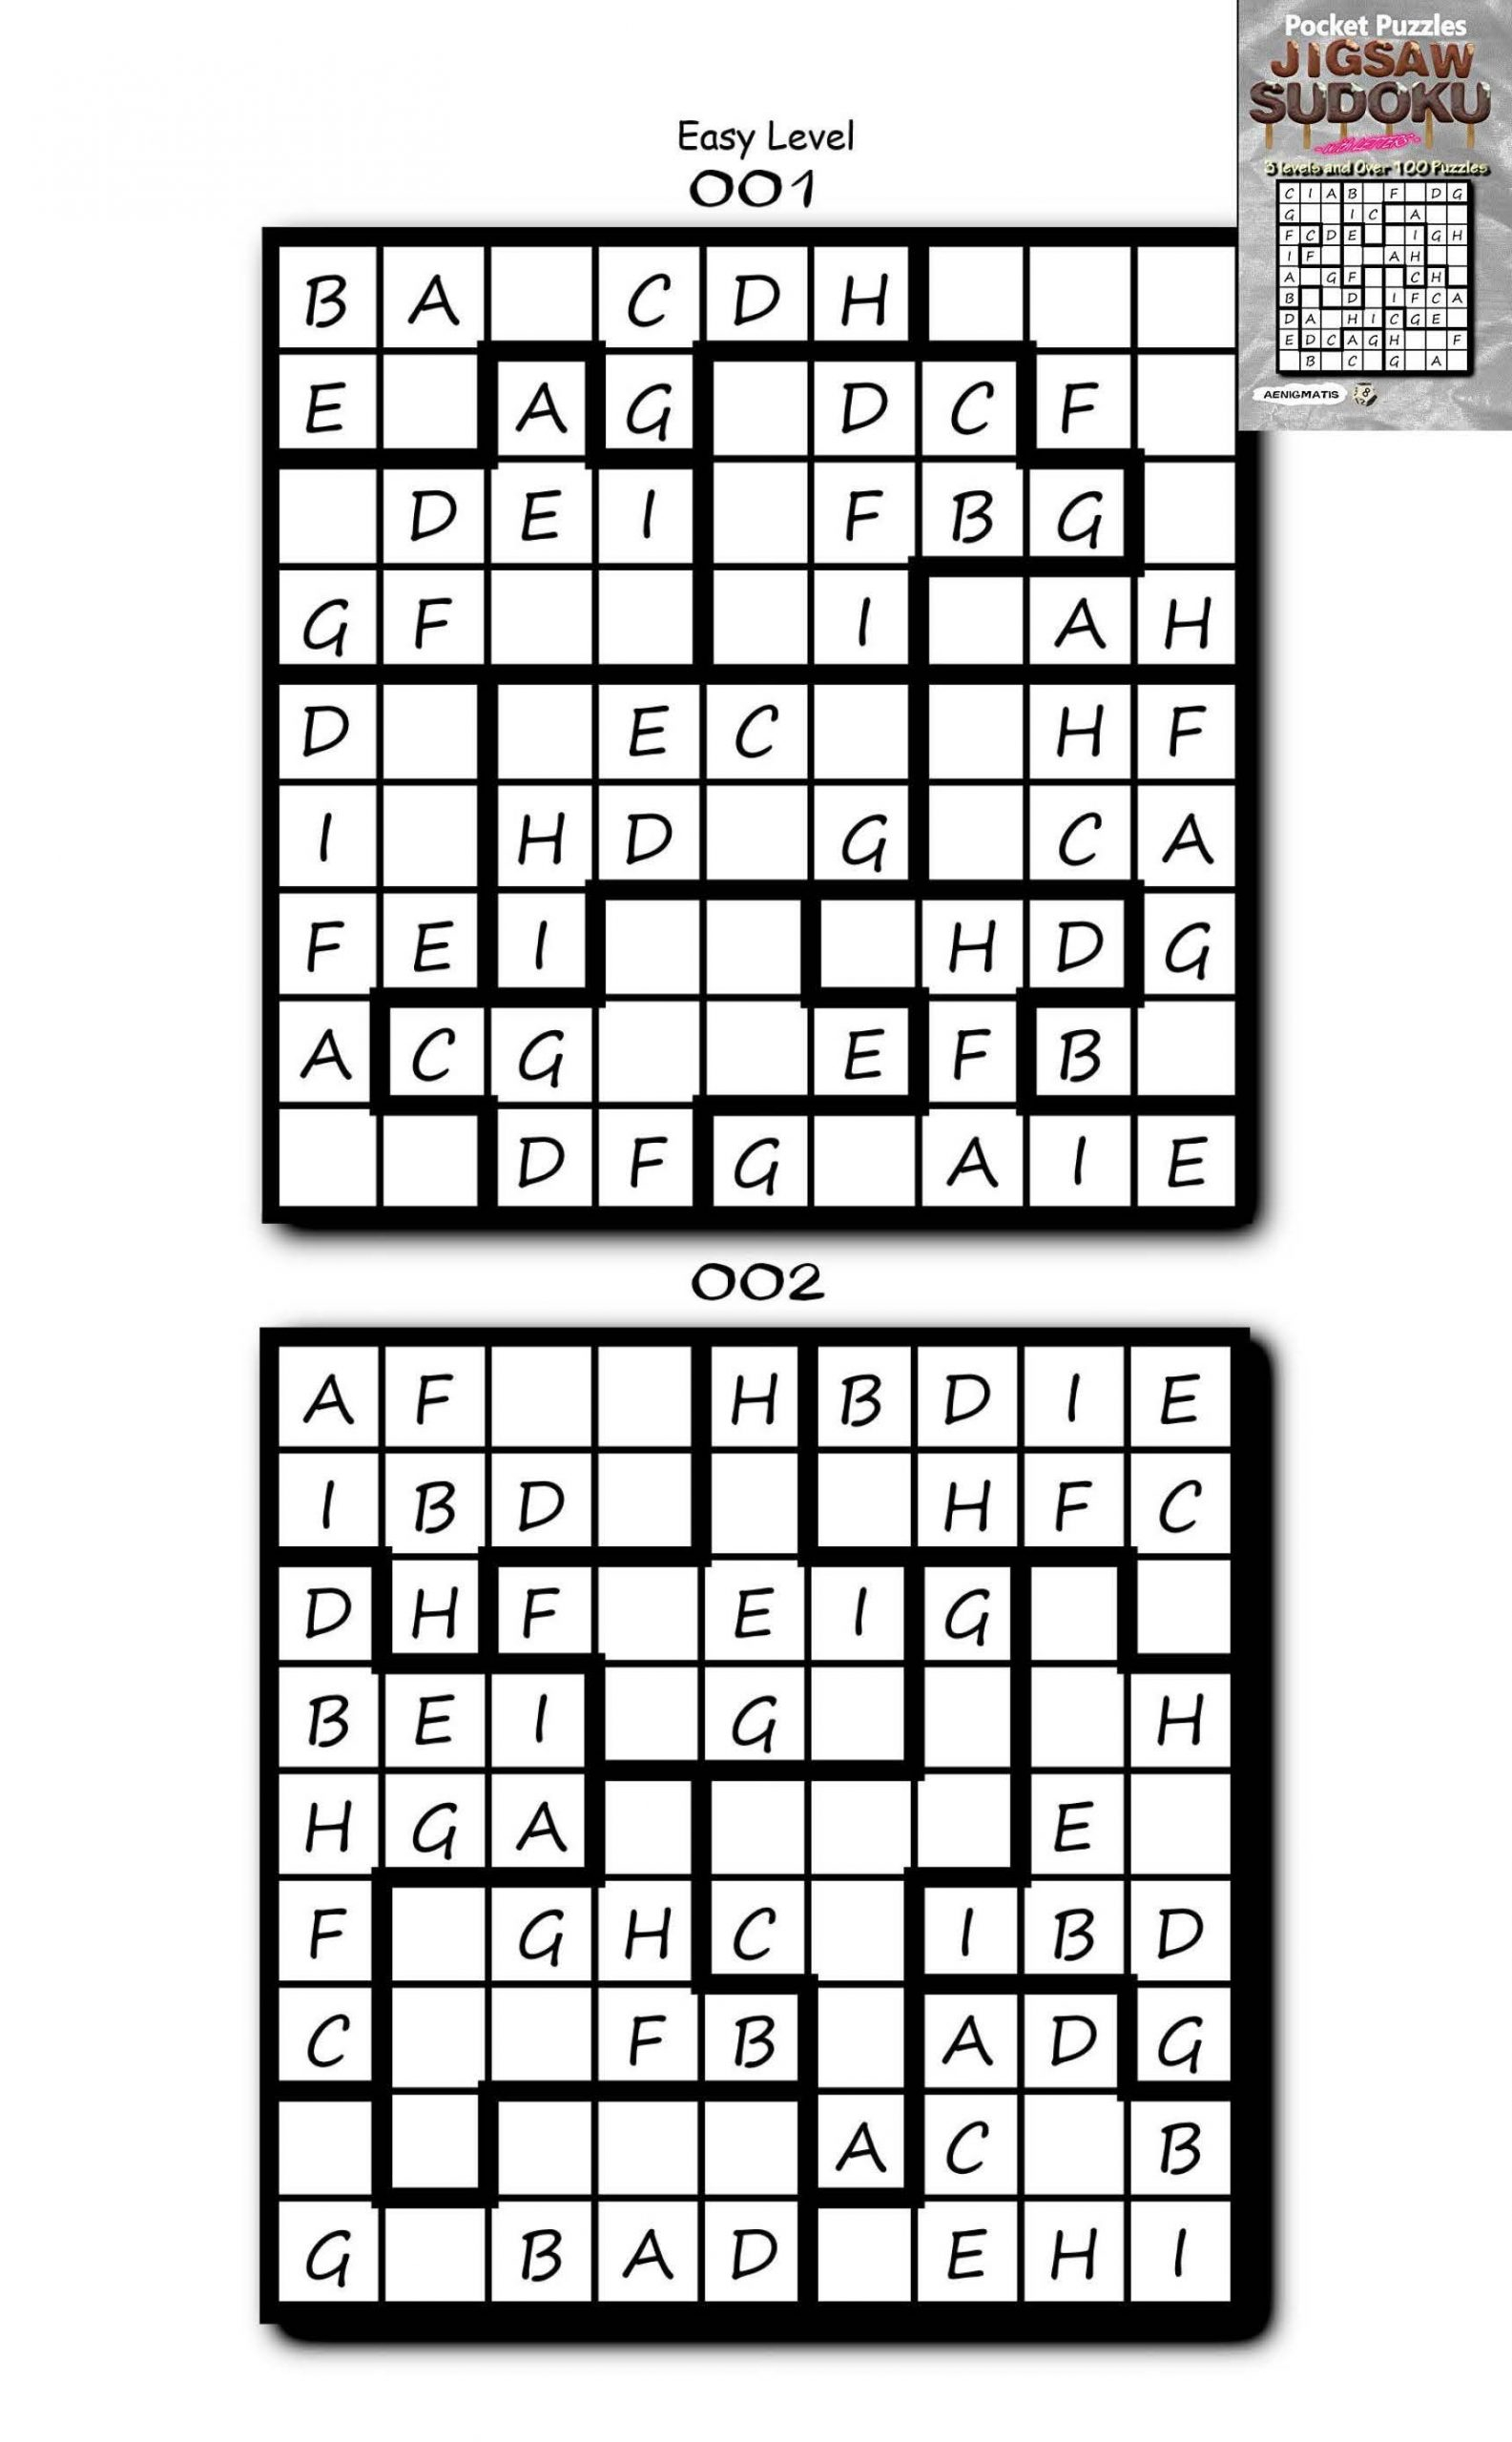 Printable Jigsaw Sudoku Puzzles